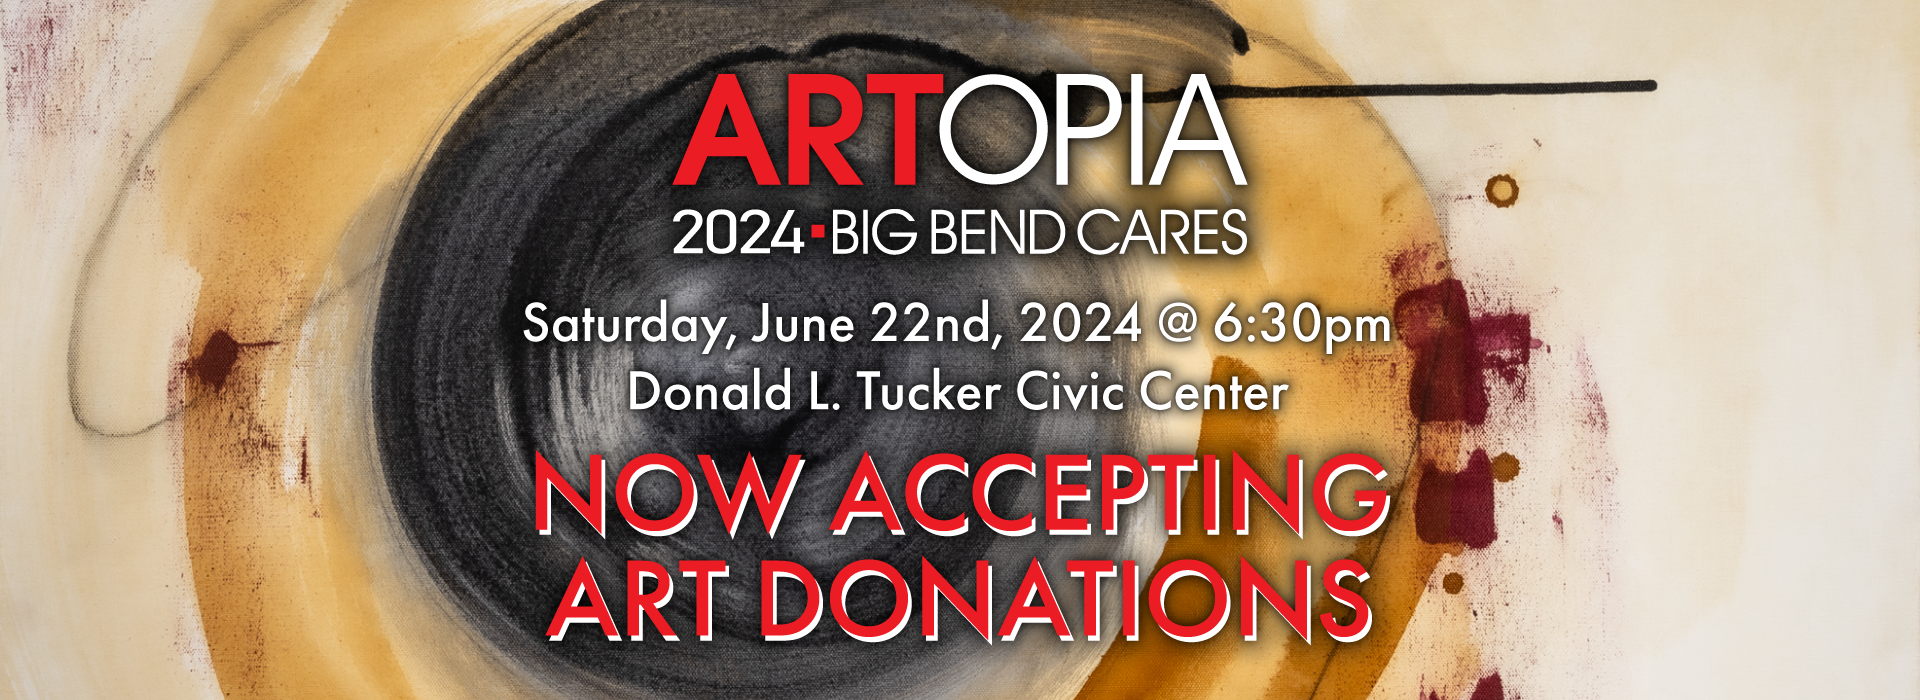 Artopia 2024 Now Accepting Art Donations LayerSlider